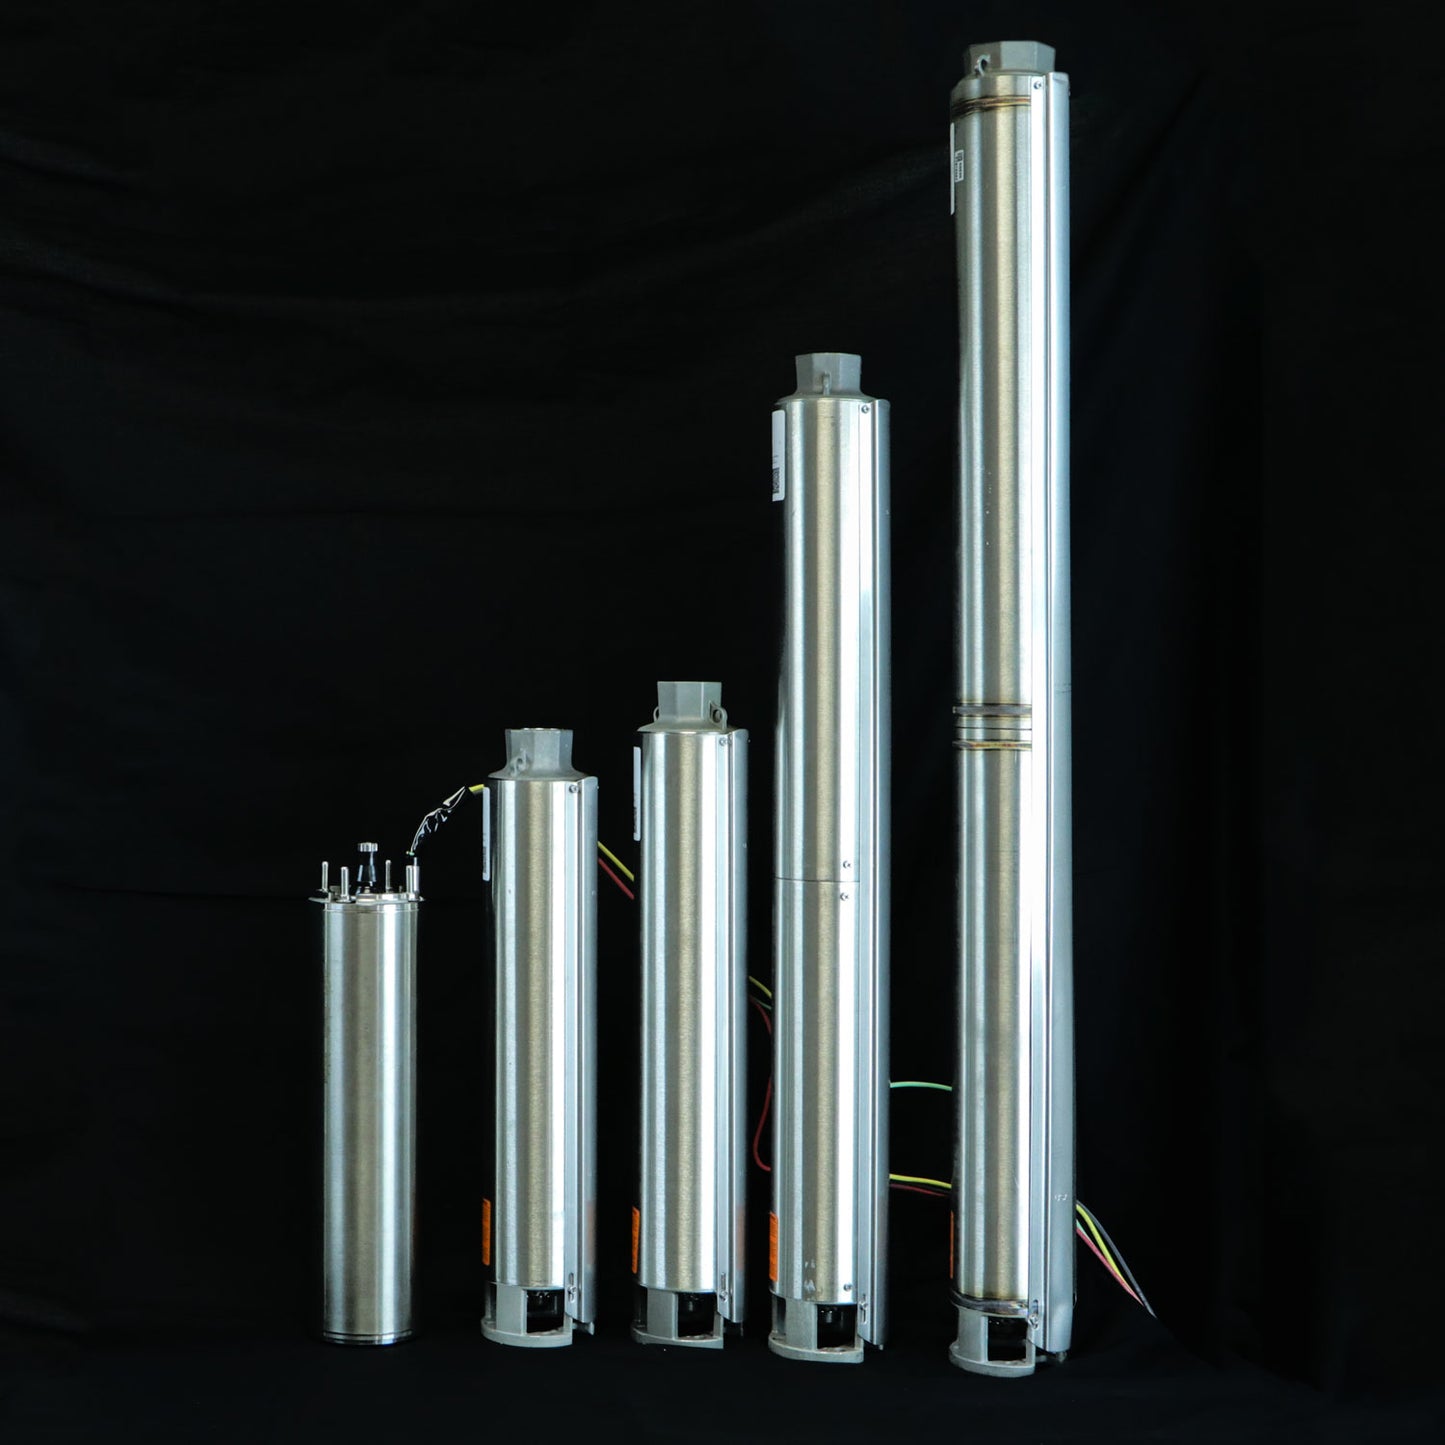 RPS Pro Series V - High Volume Solar Pump Kits (Under 300ft)